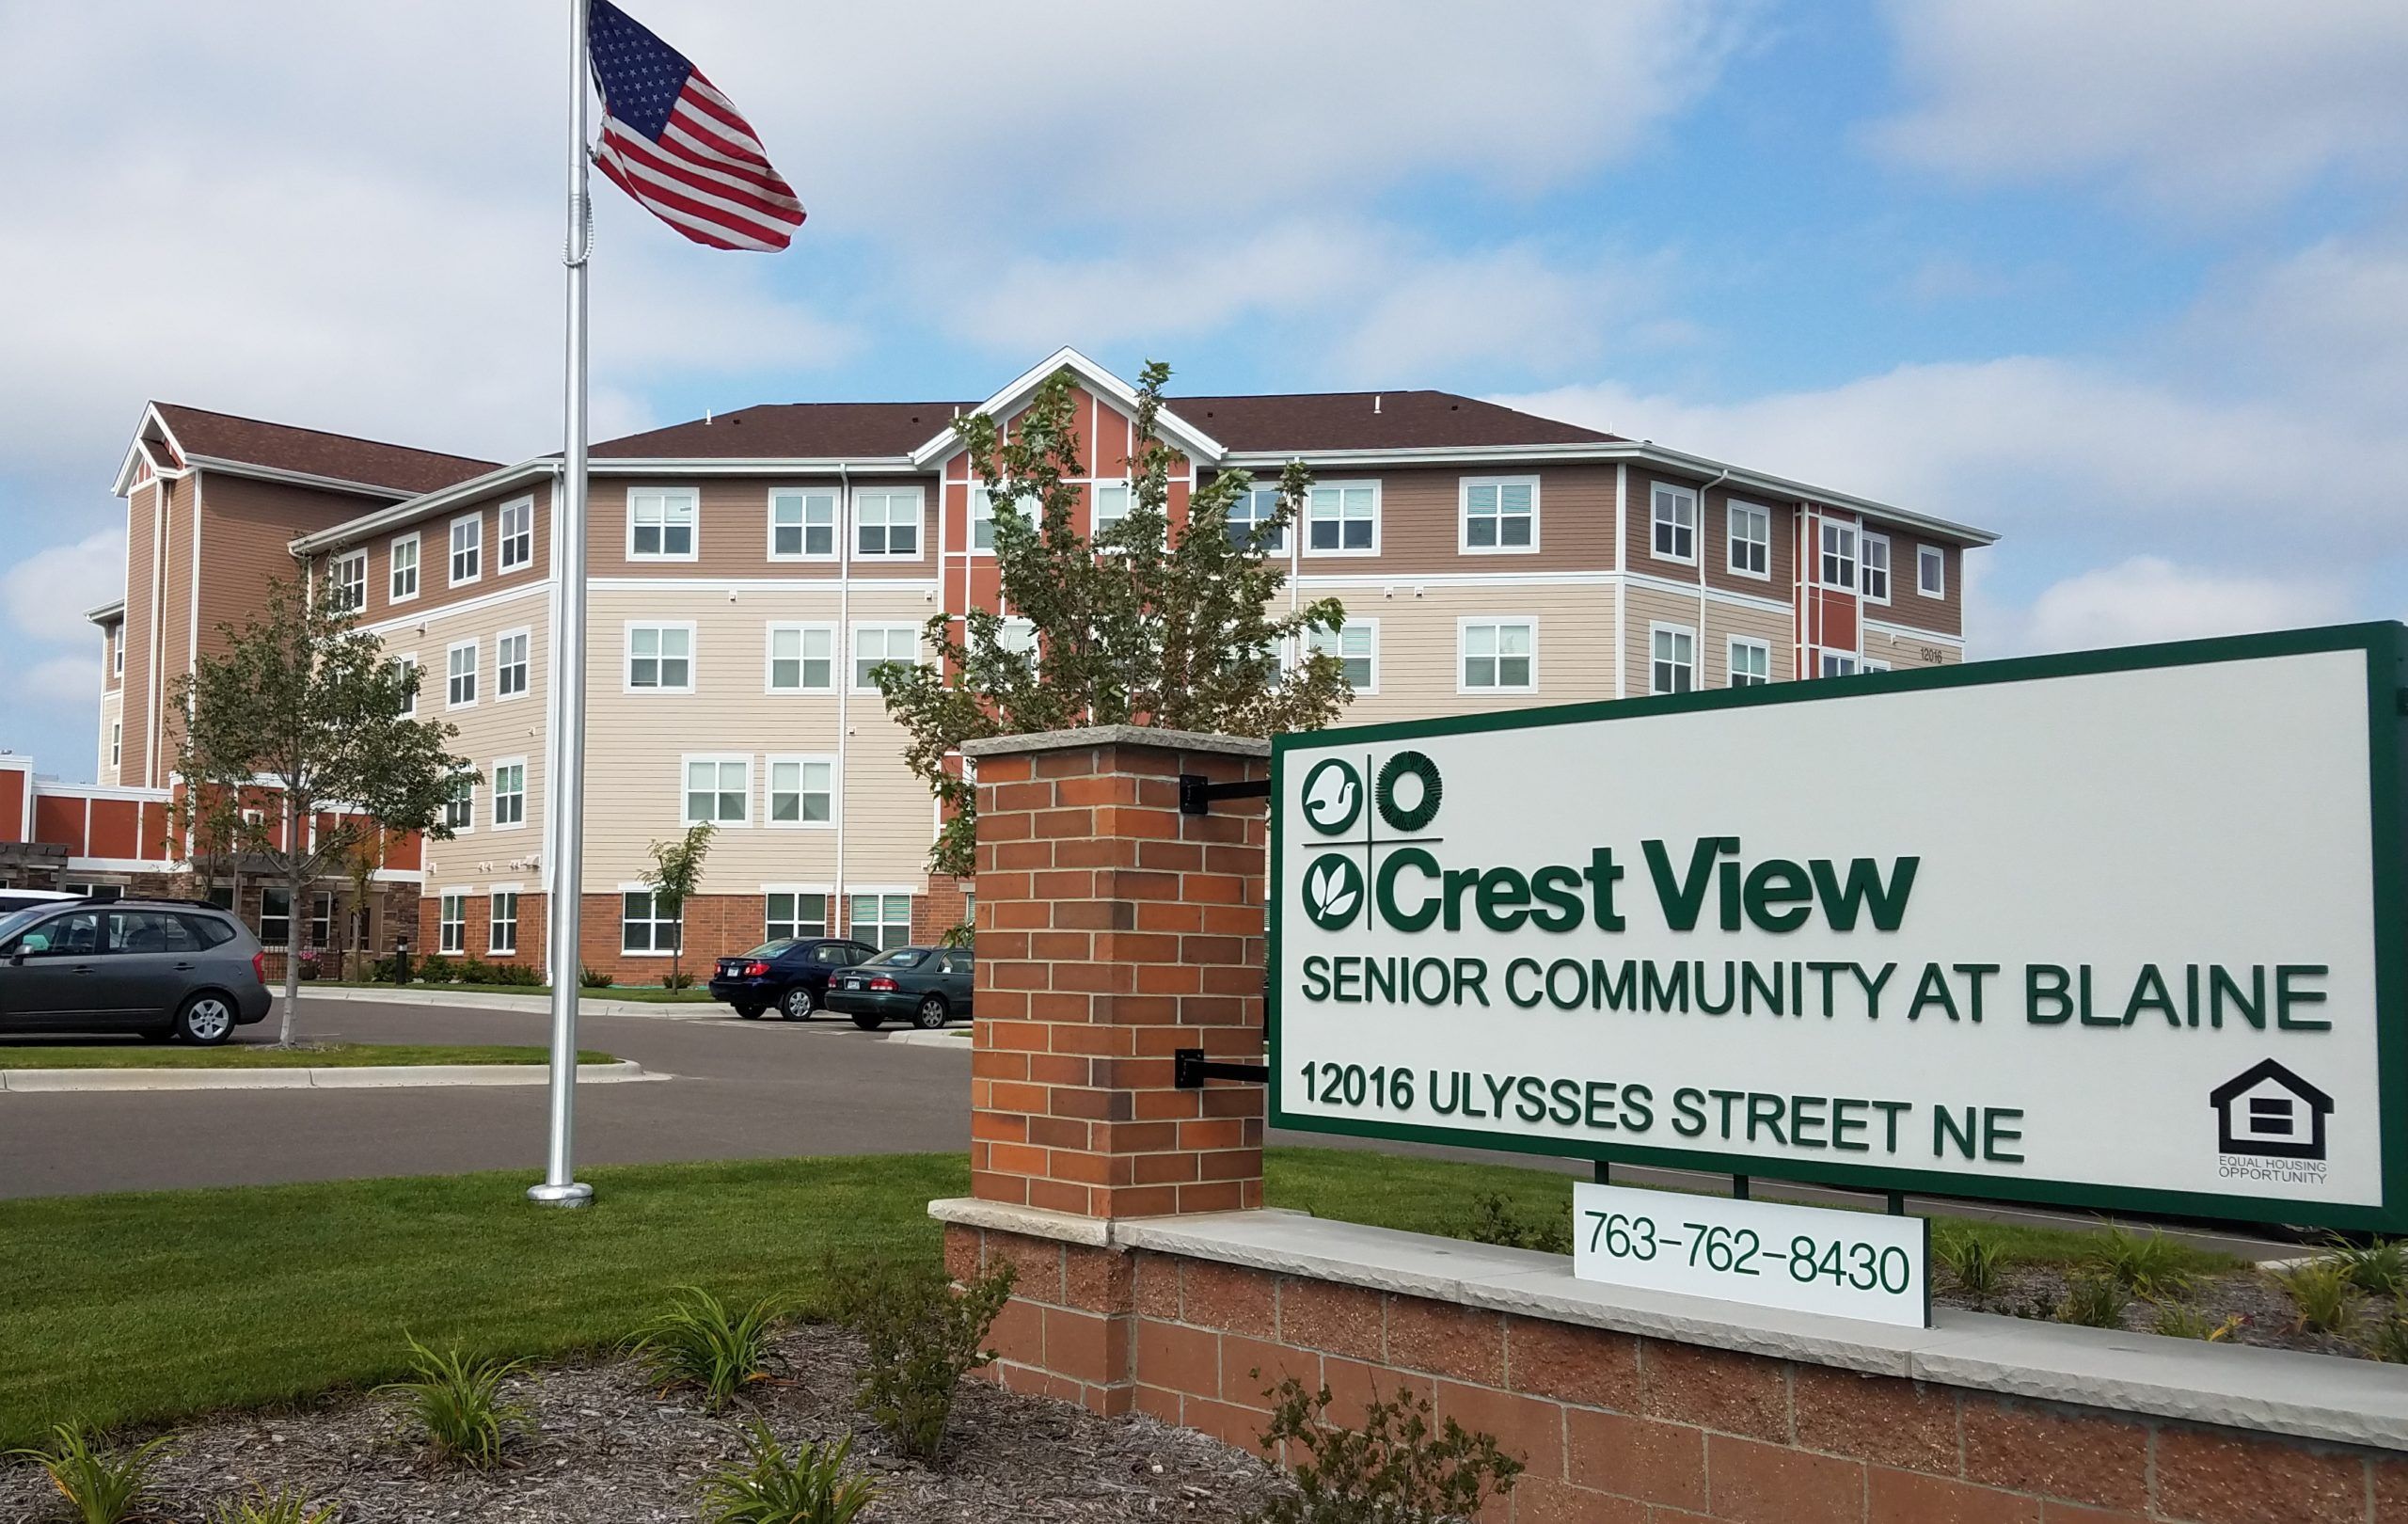 Crest View Senior Community, undefined, undefined 1